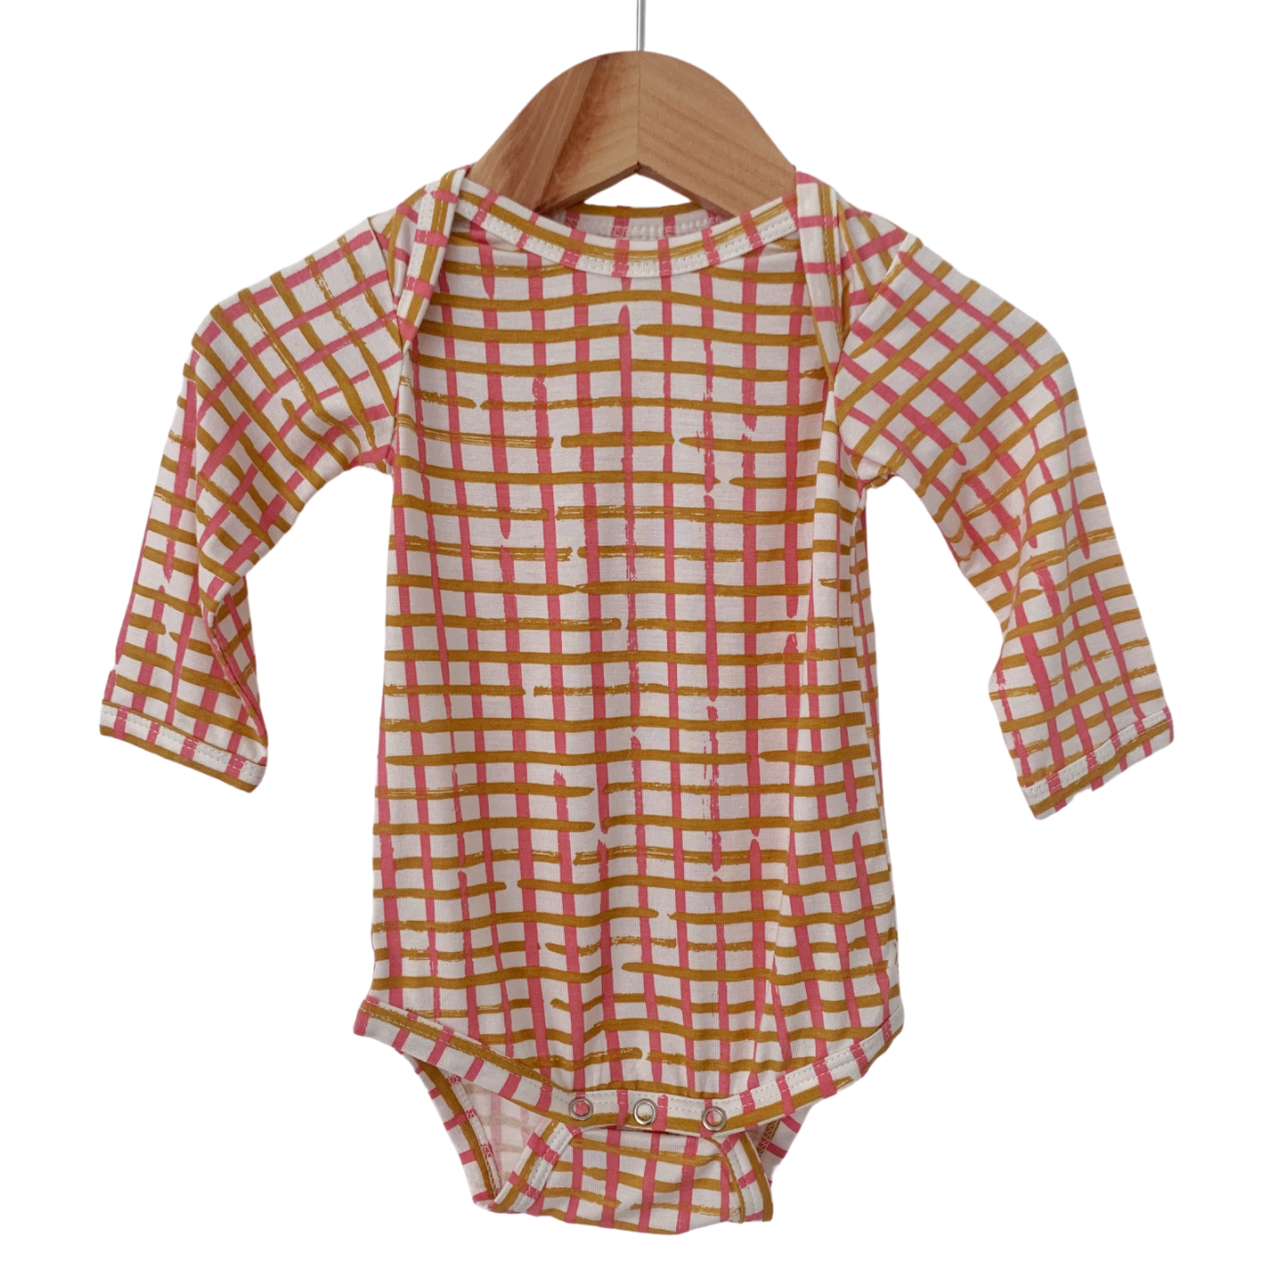 SpearmintLOVE’s baby Long Sleeve Bodysuit, Pink Check